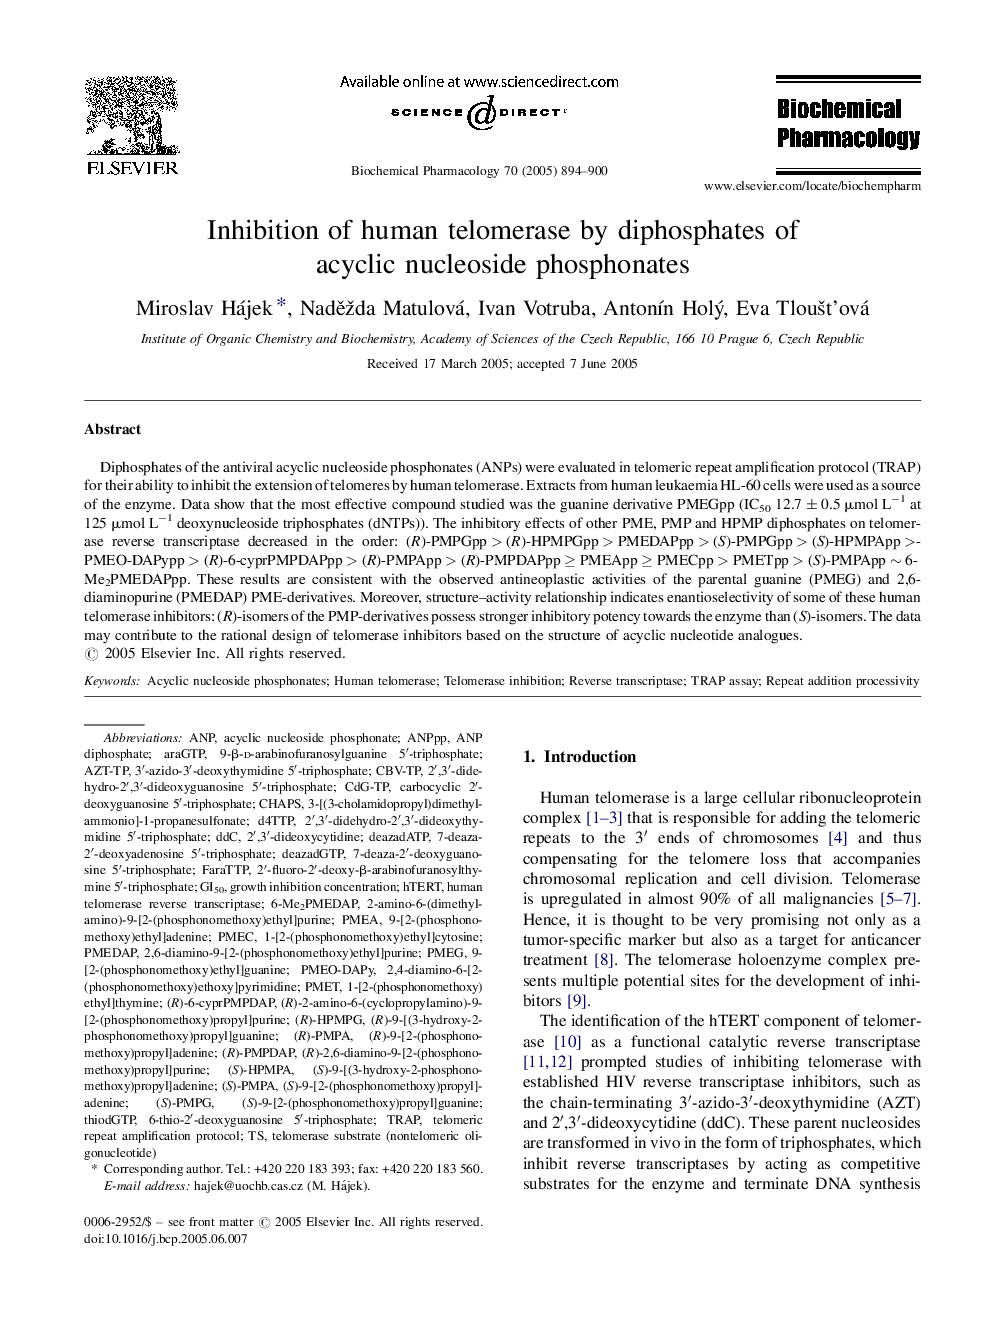 Inhibition of human telomerase by diphosphates of acyclic nucleoside phosphonates